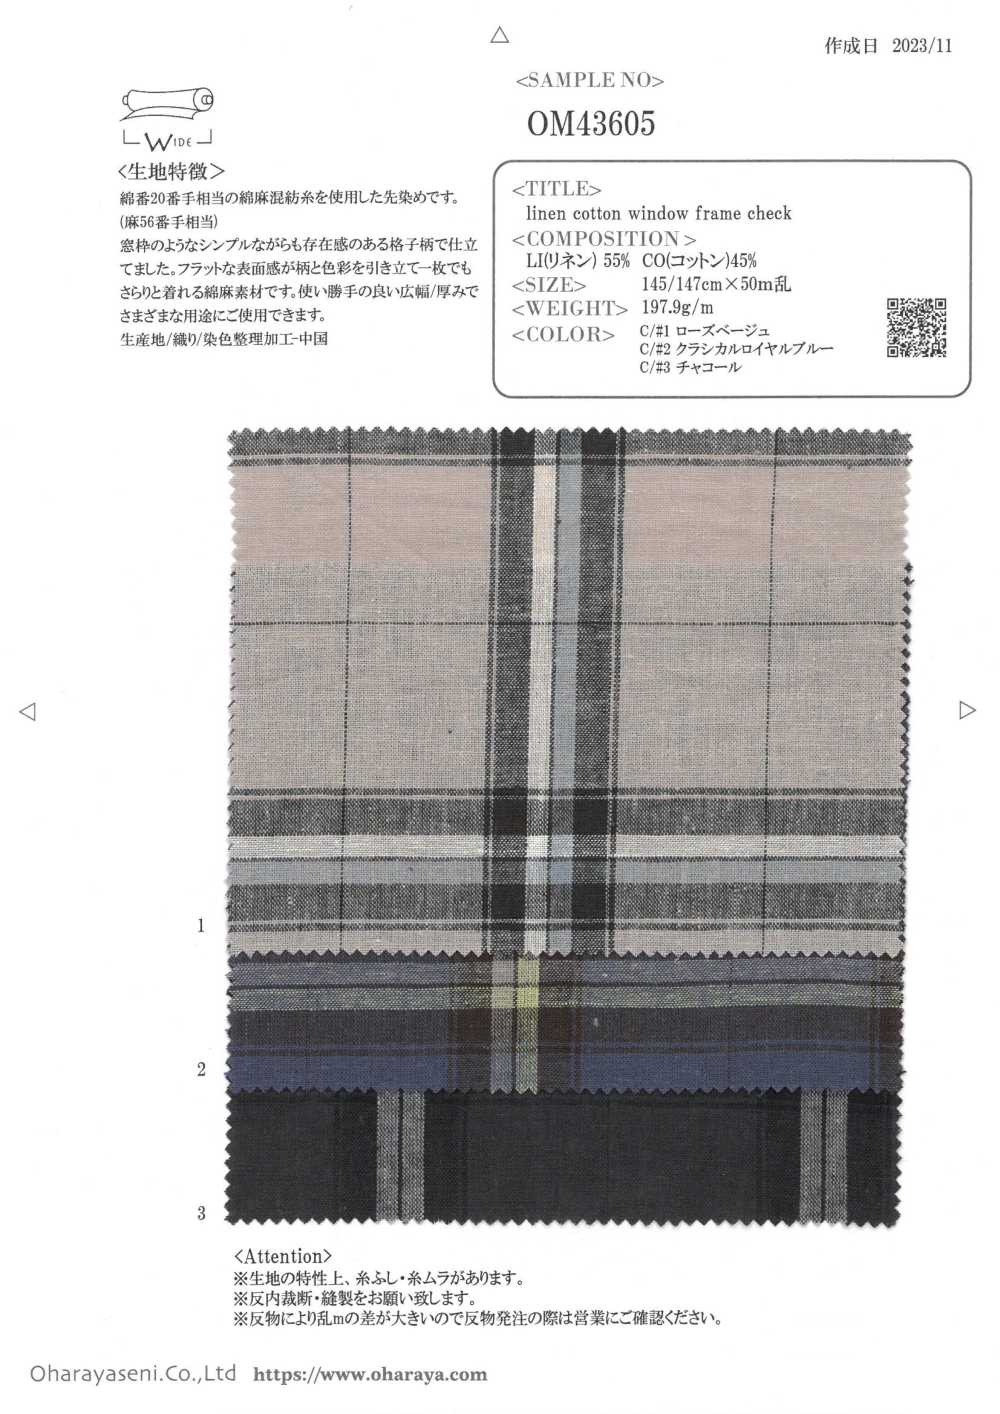 OM43605 linen cotton window frame check[원단] Oharayaseni